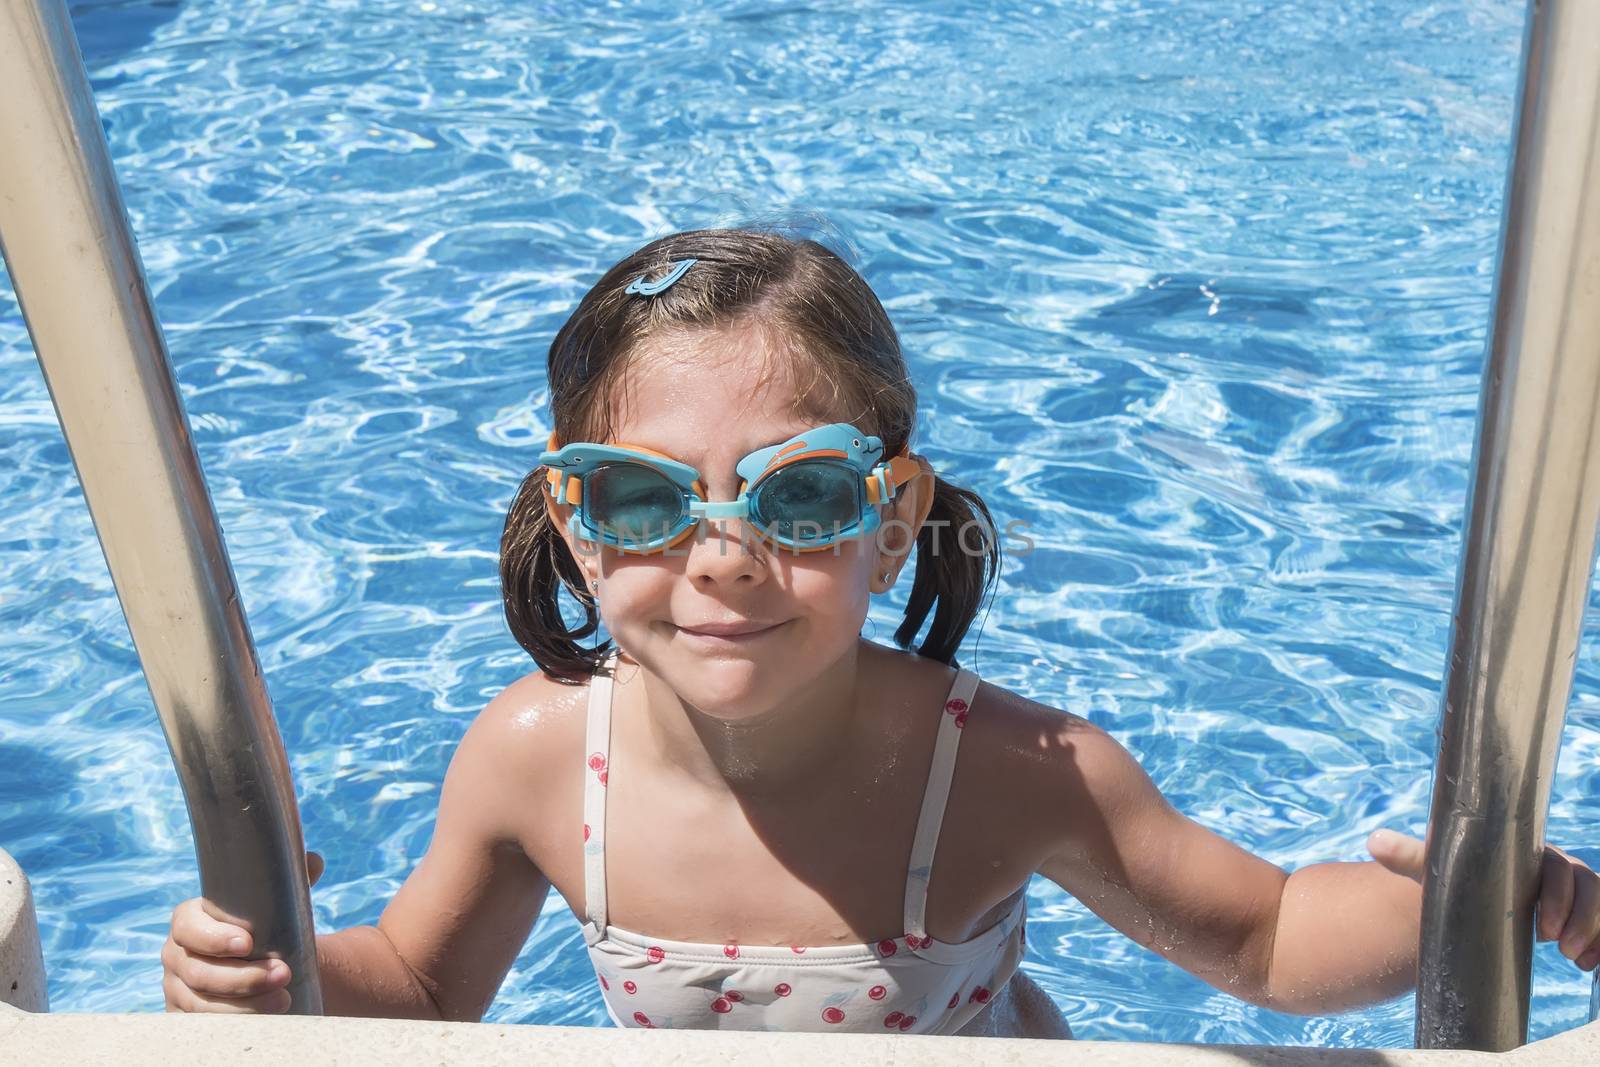 Smiling girl enjoying the pool in summer